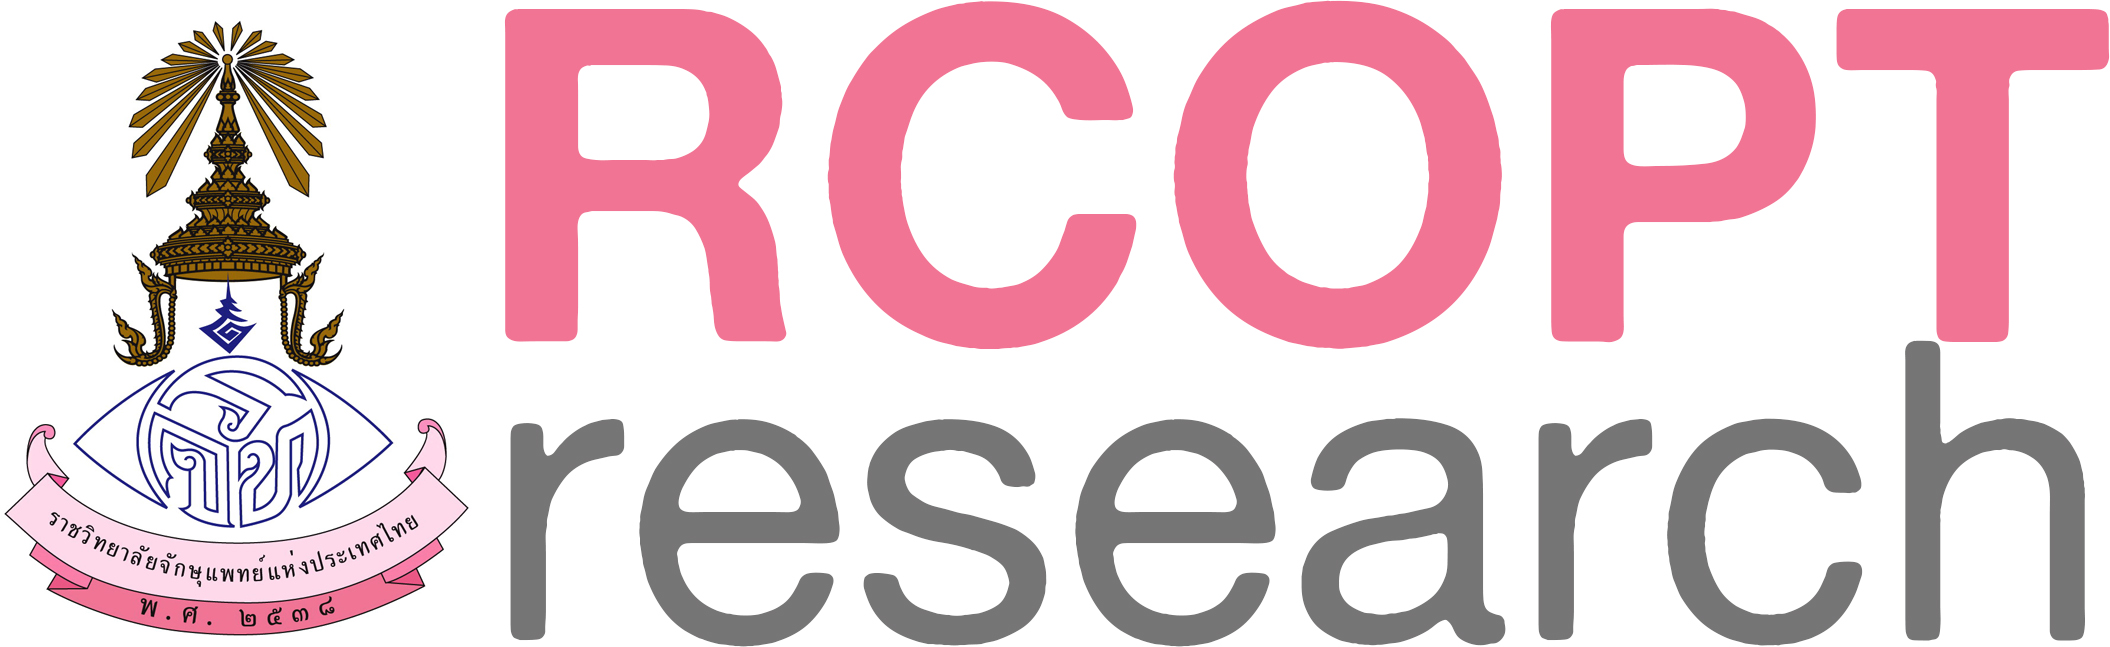 1560RCOPT research logo1.jpg